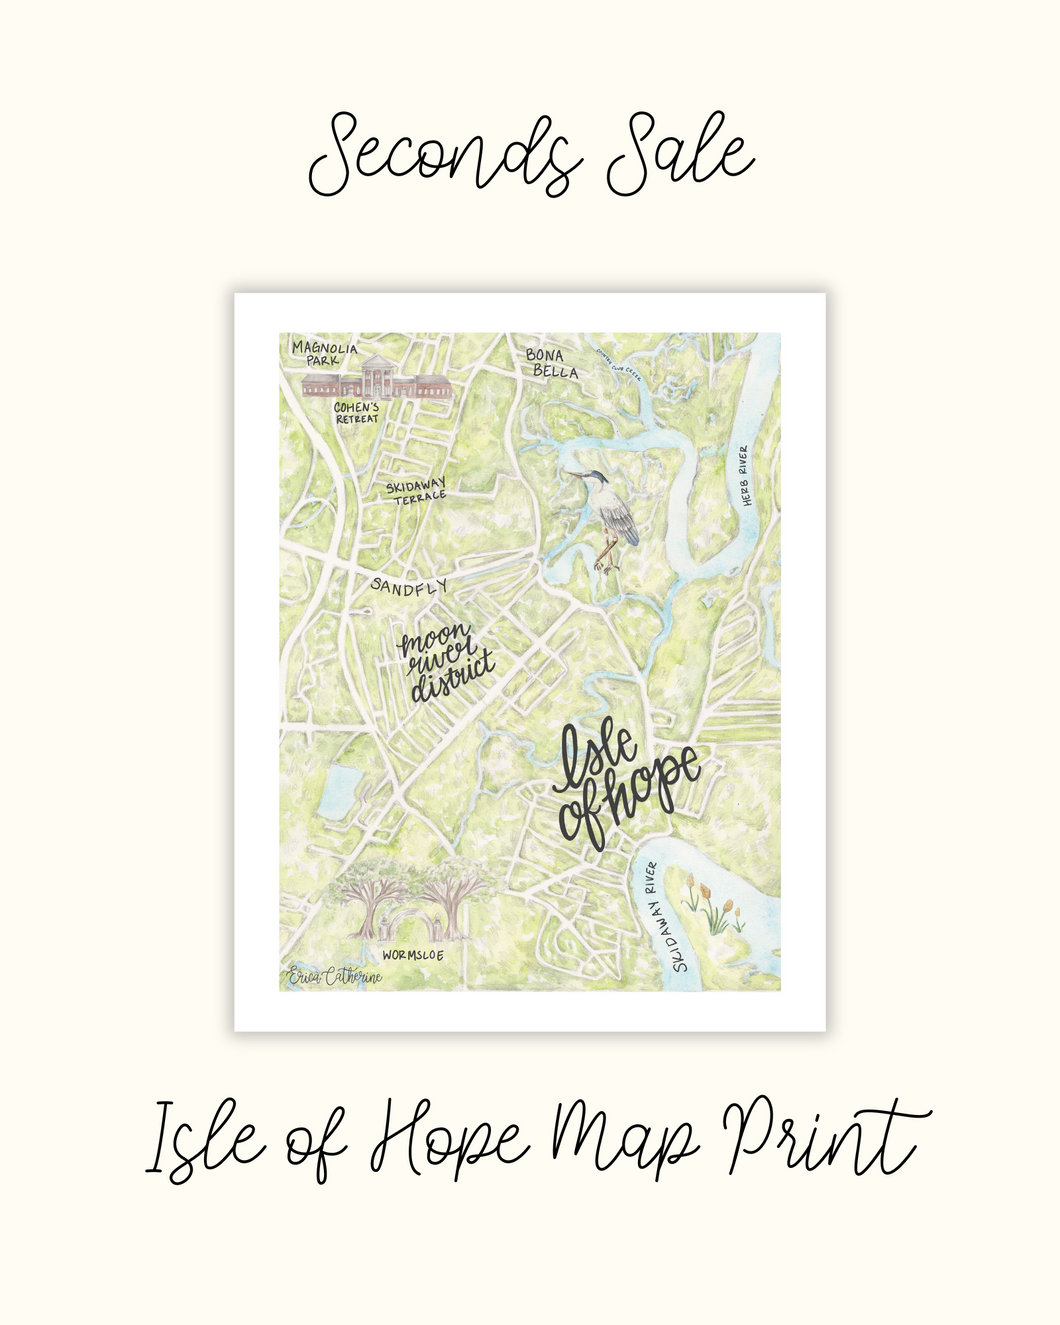 Isle of Hope, Georgia Map Print - Seconds Sale